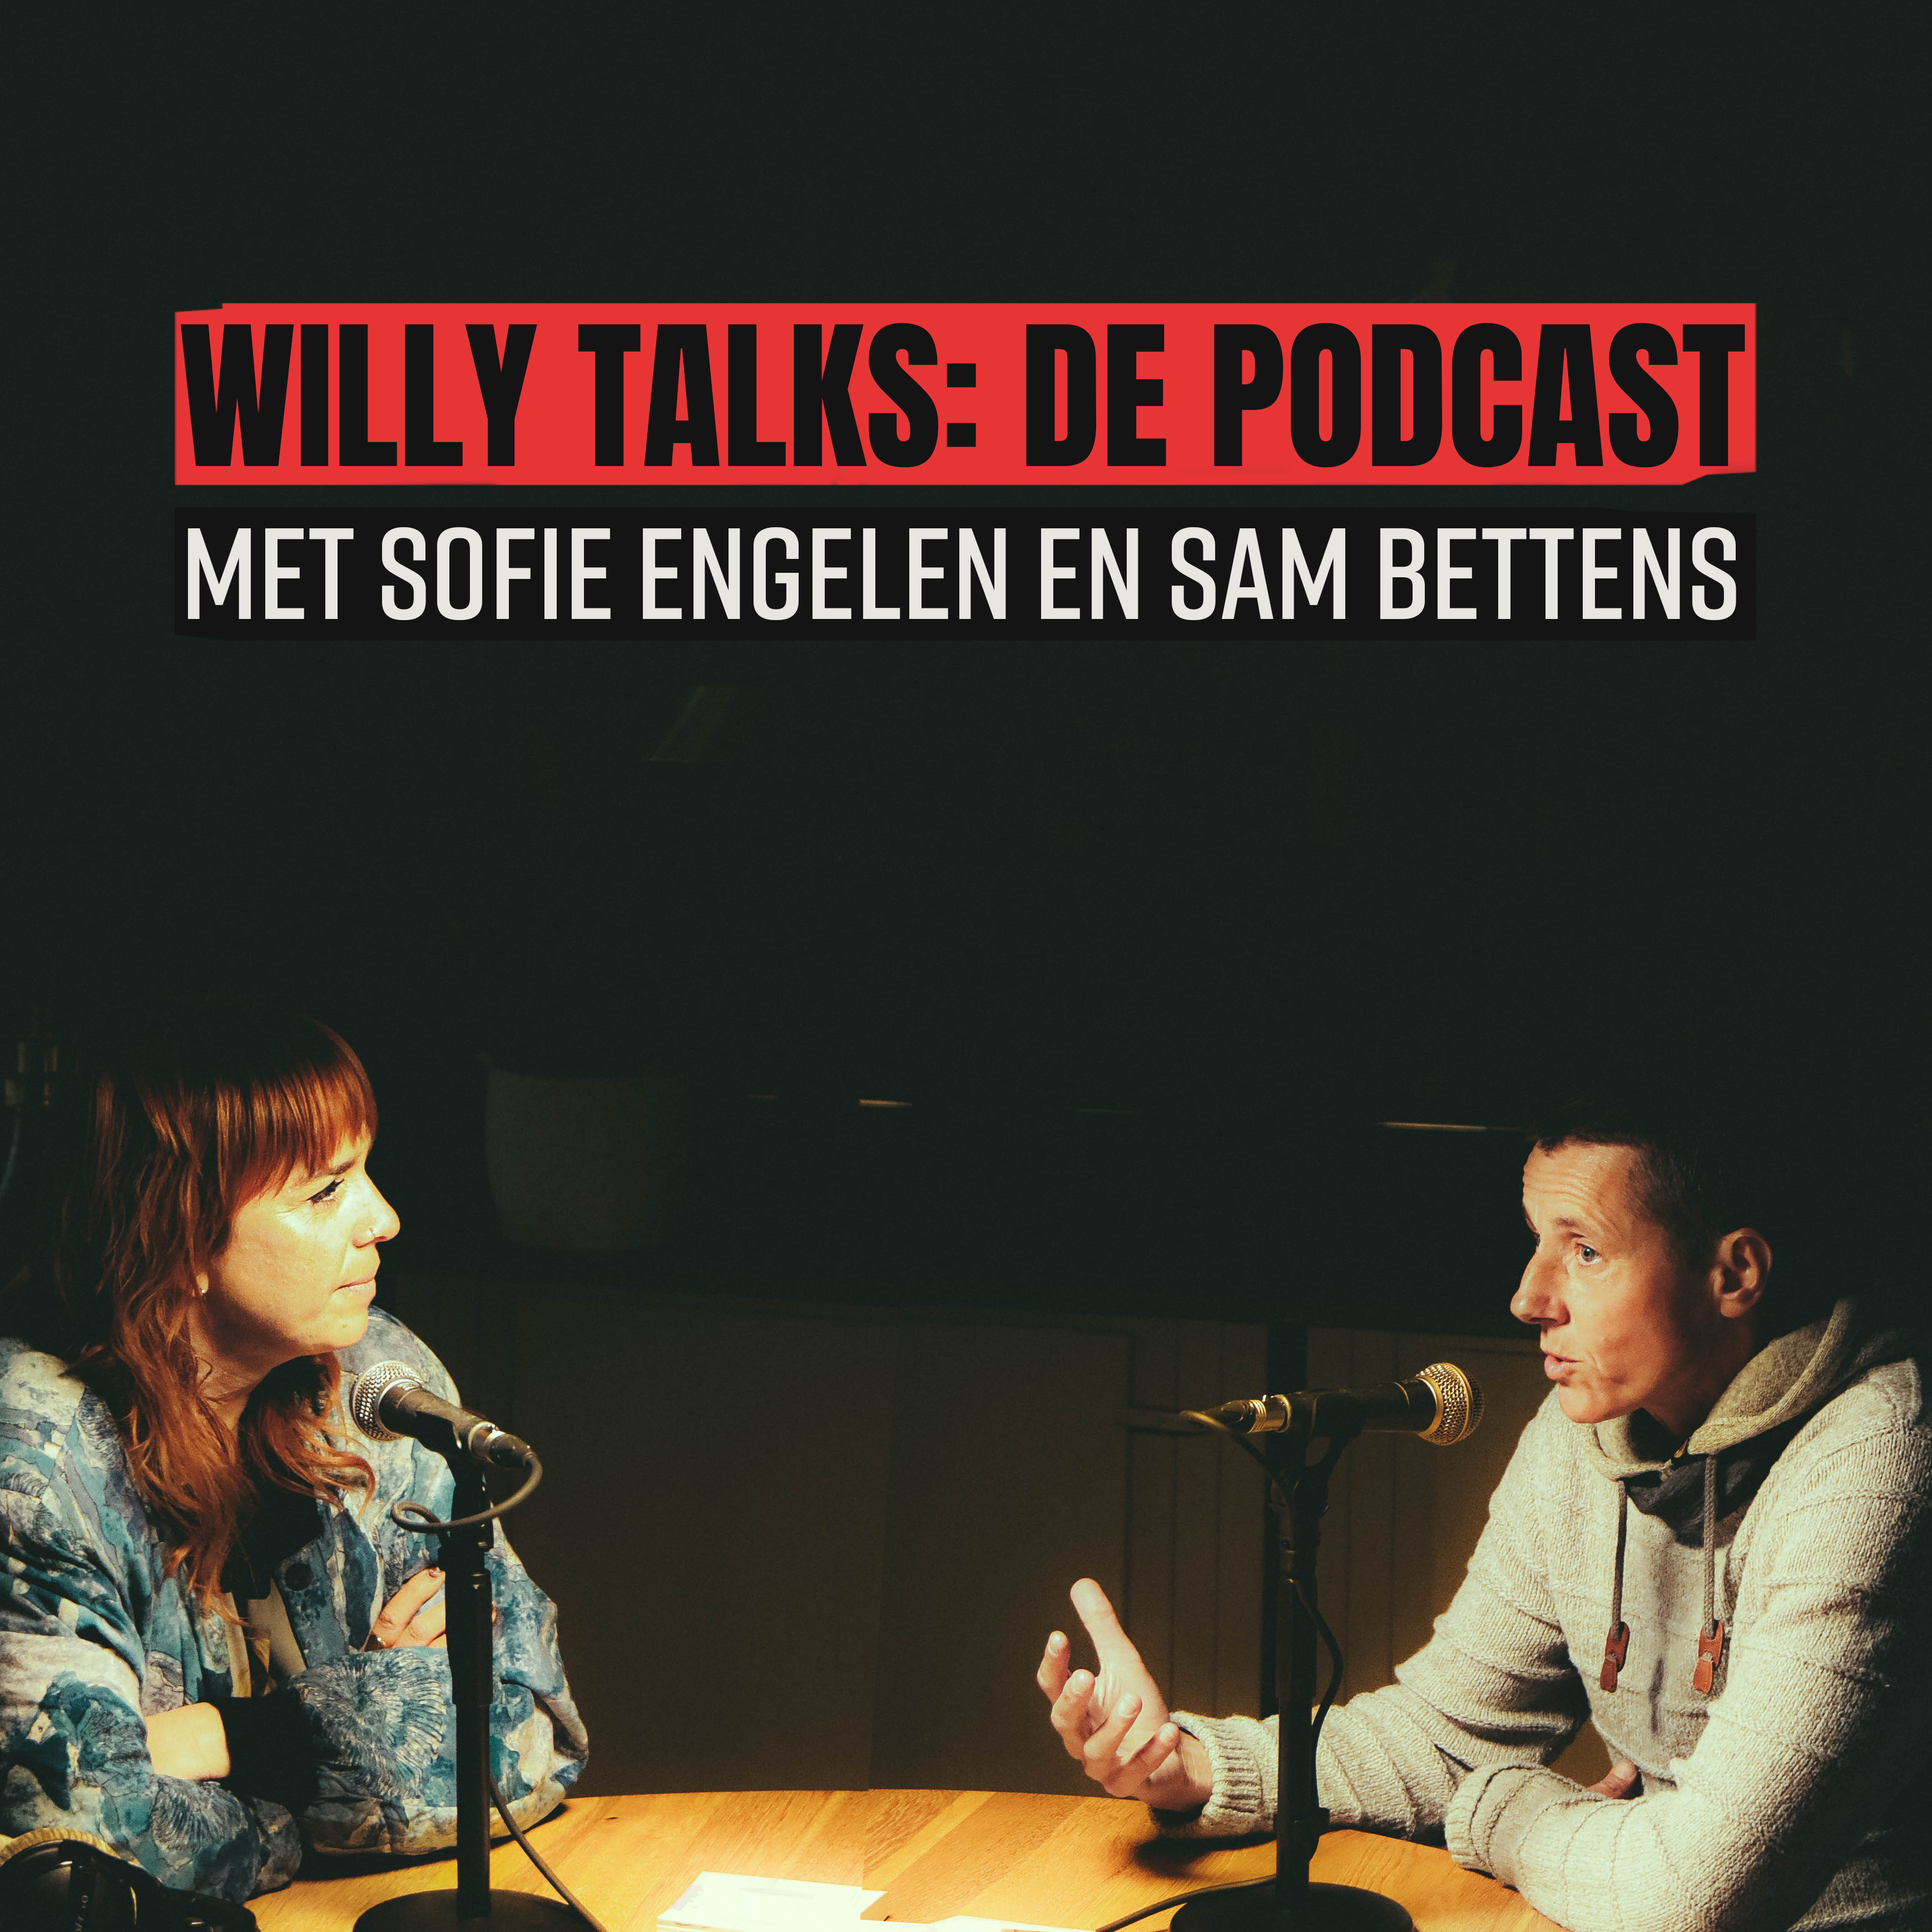 Willy talks  de podcast met sam bettens